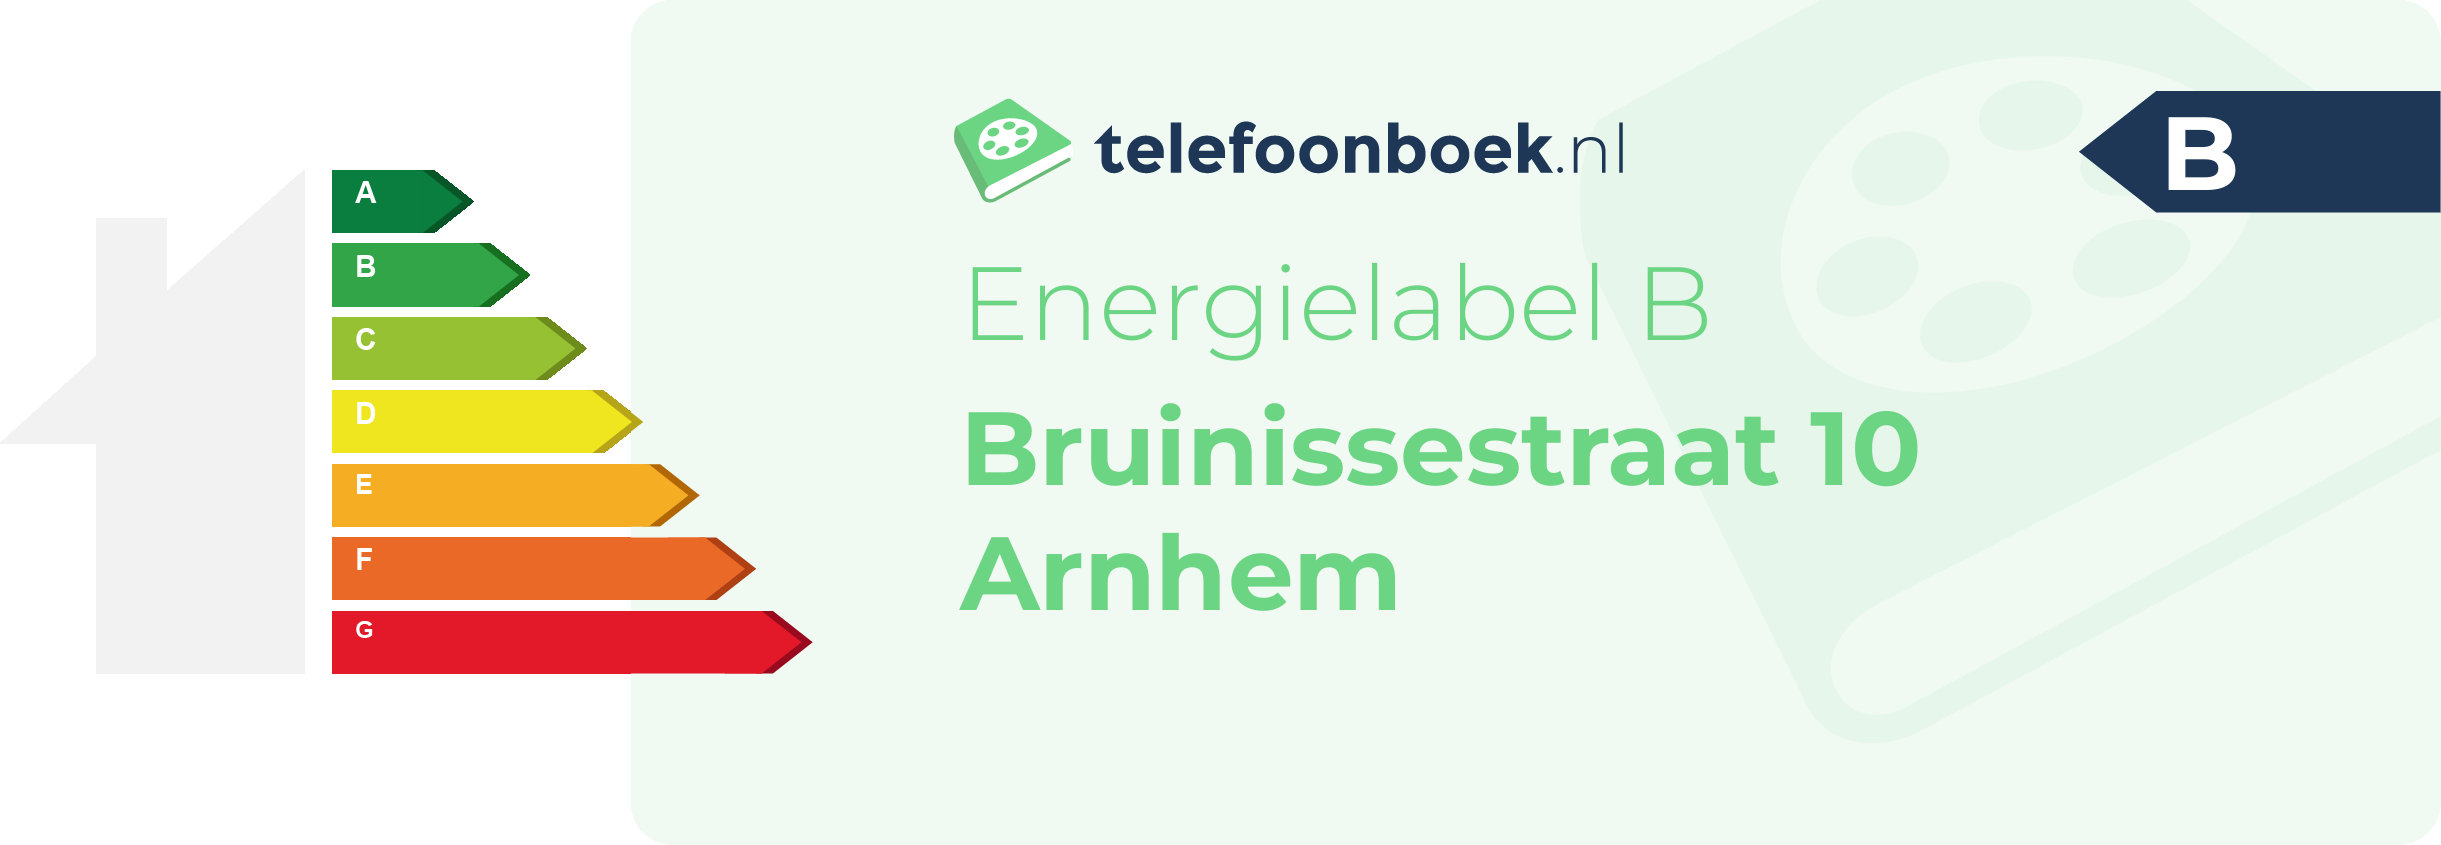 Energielabel Bruinissestraat 10 Arnhem